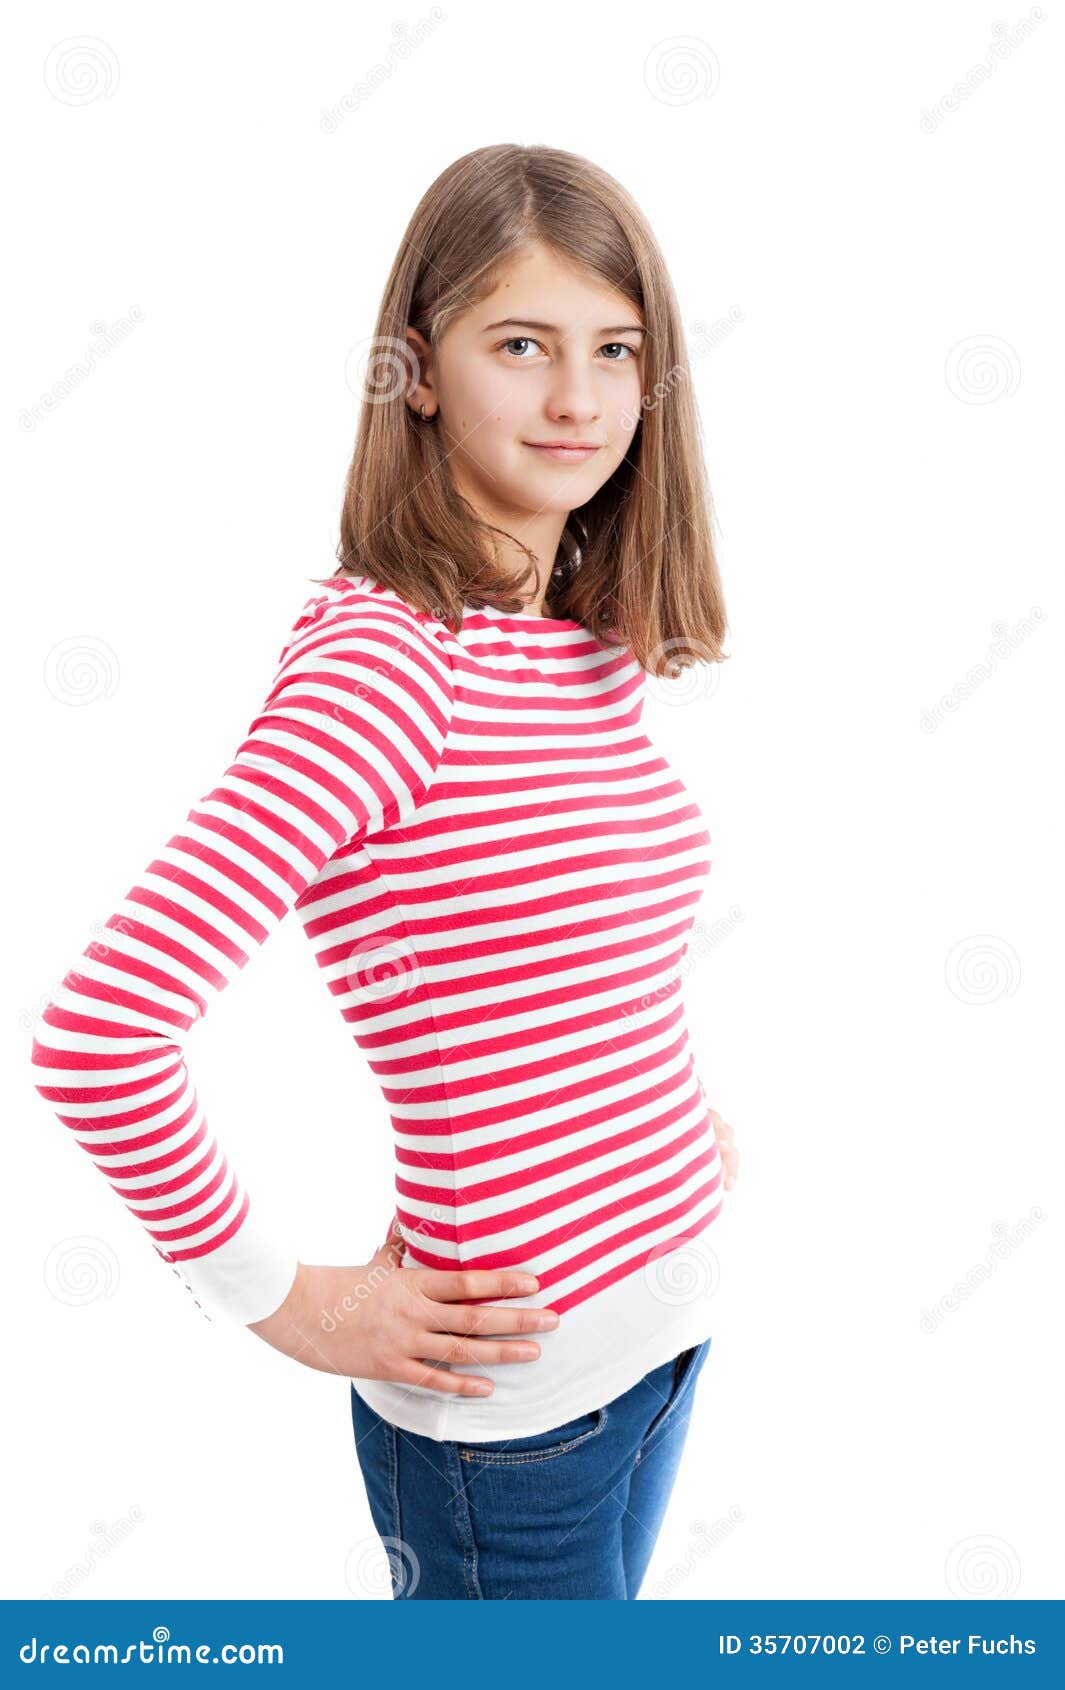 girls striped shirt